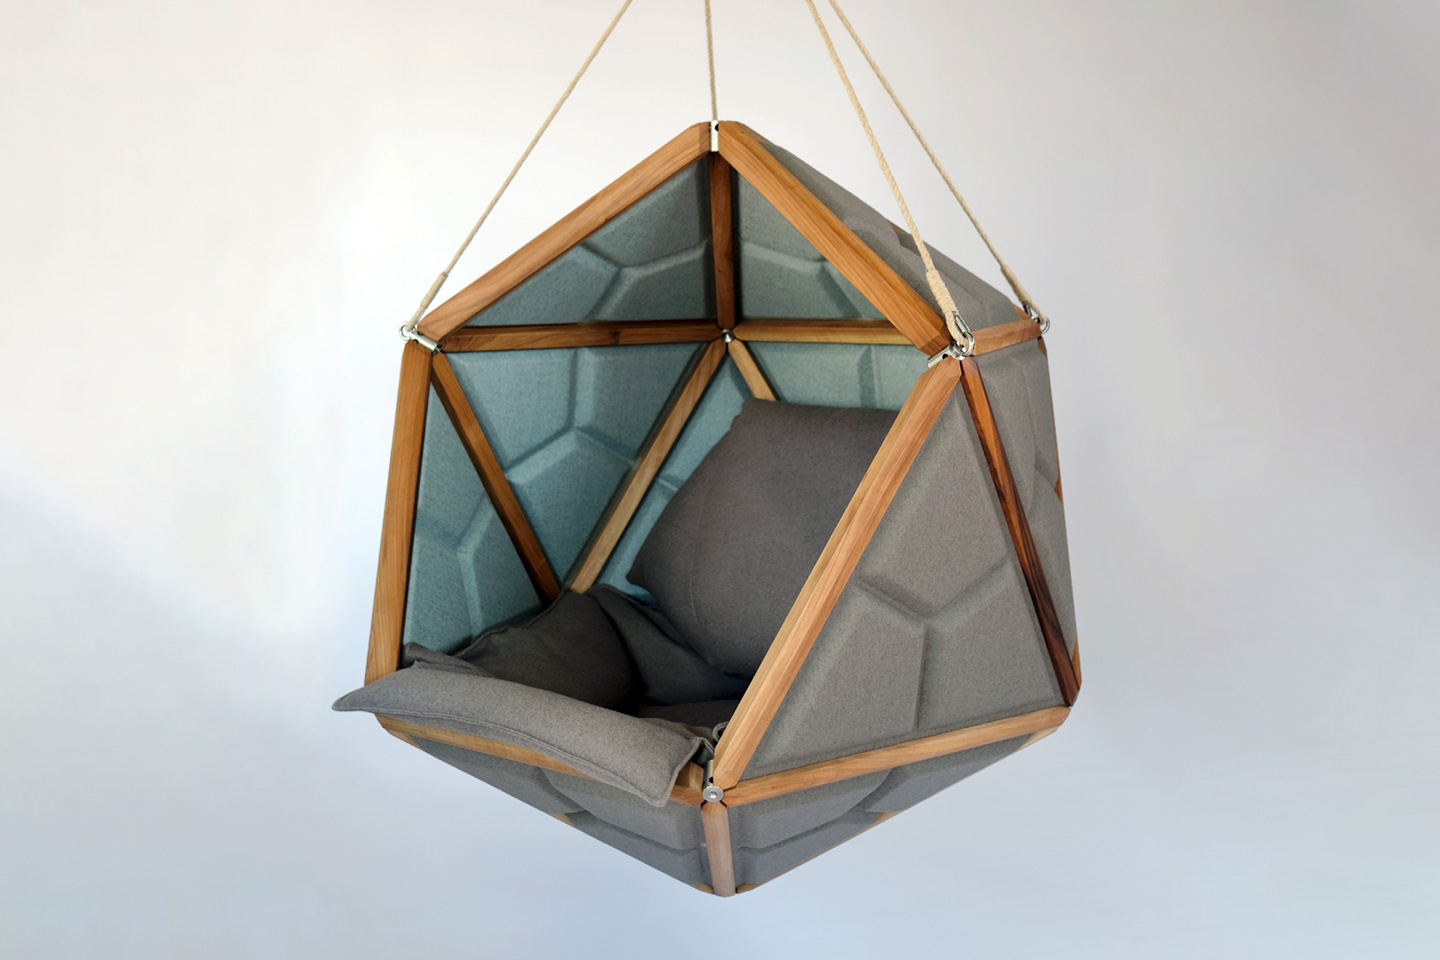 Theoretically a “cool” chair - Yanko Design